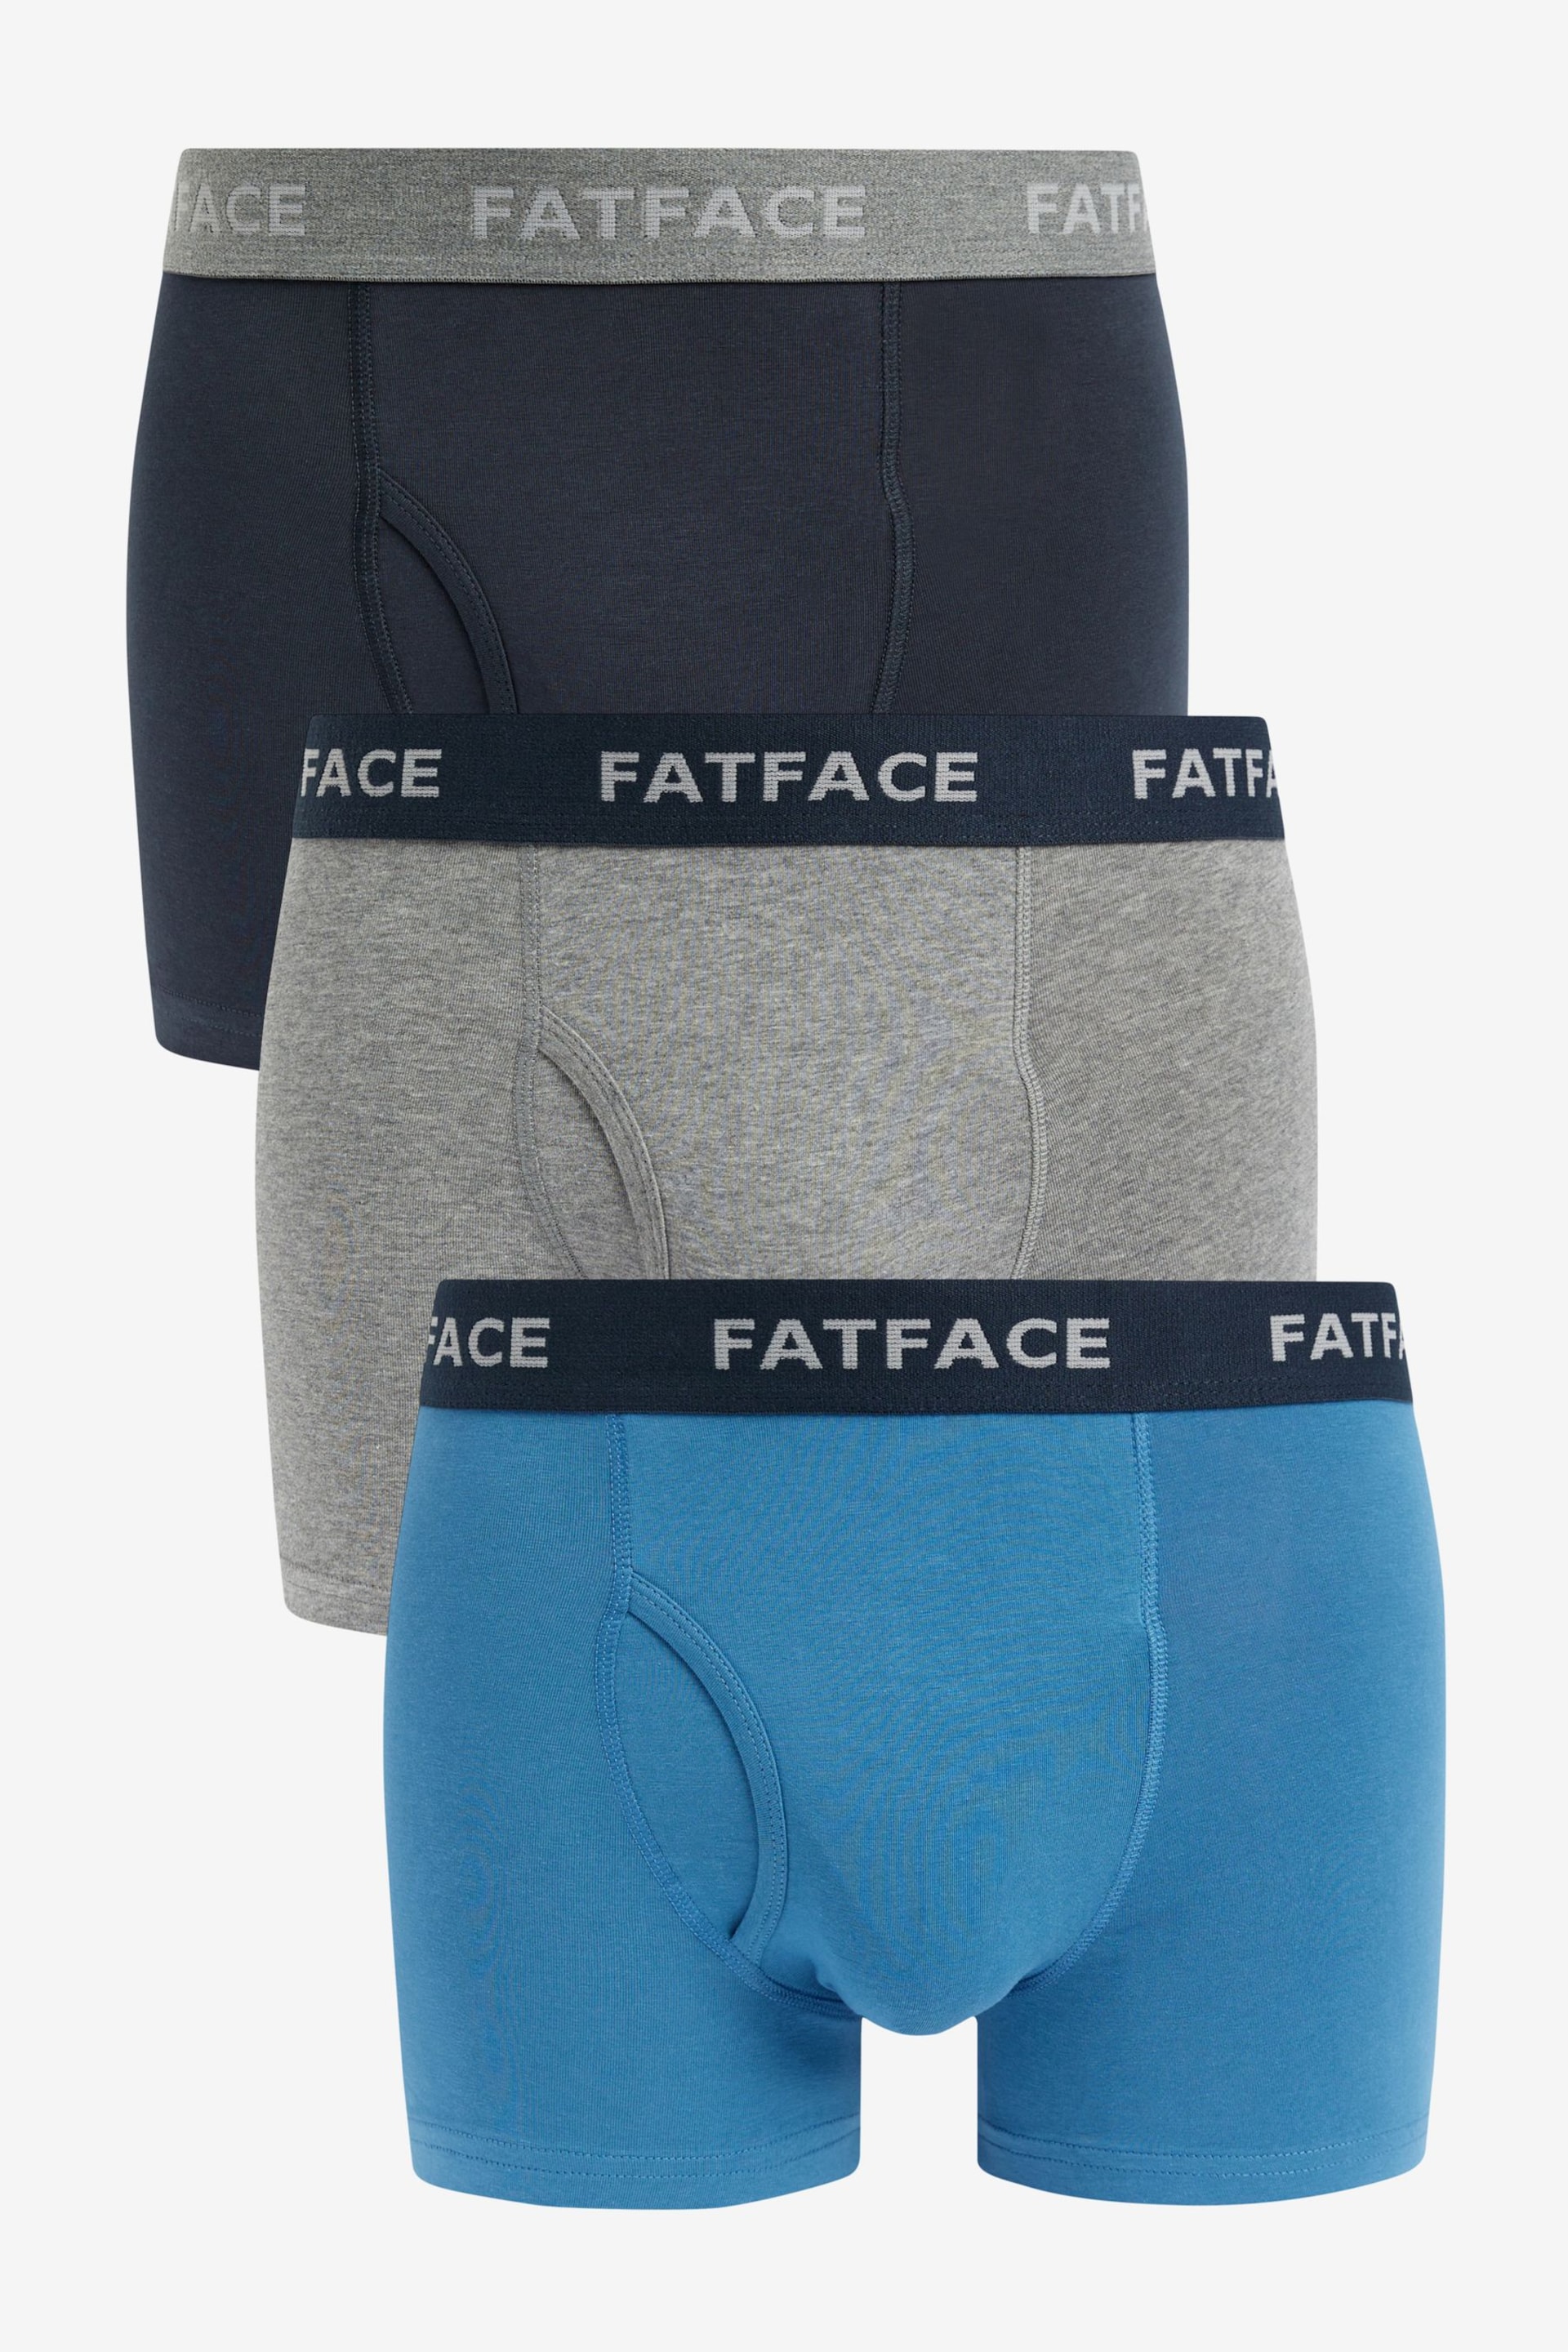 FatFace Blue Plain Boxers 3 Pack - Image 1 of 6